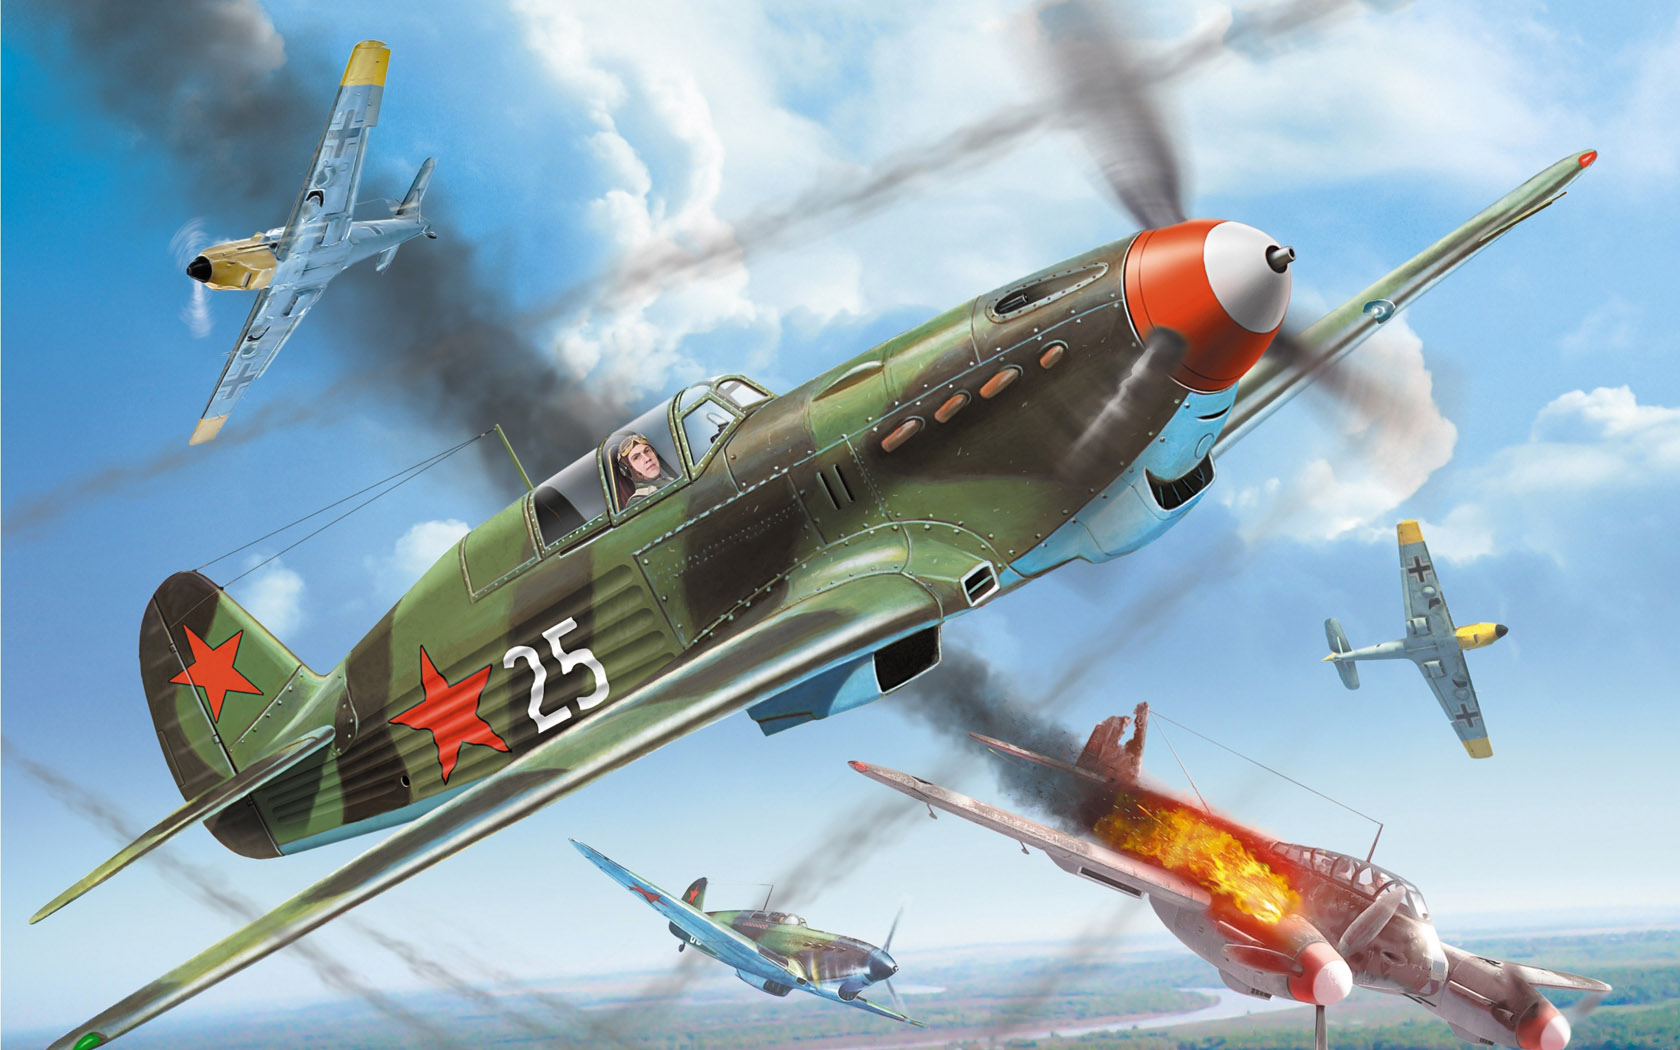 General 1680x1050 aircraft flying sky army fire war military military vehicle artwork pilot clouds dogfight Messerschmitt Bf 109